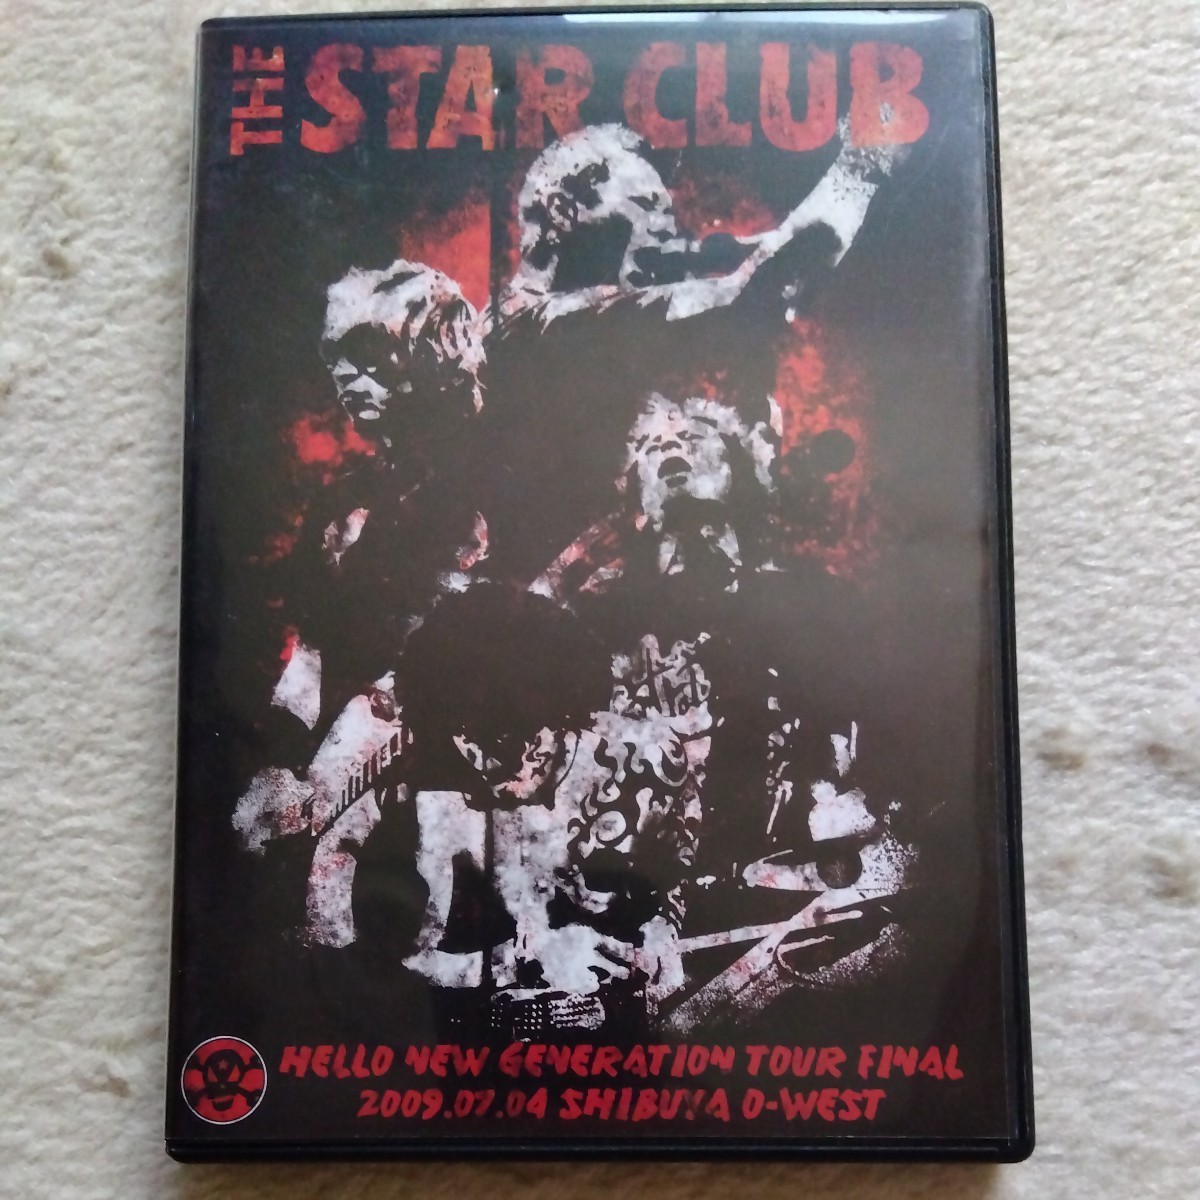 THE STAR CLUB DVD HELLO GENERATION TOUR FINAL 2009.07.04 SHIBUYA 0-WEST スタークラブ